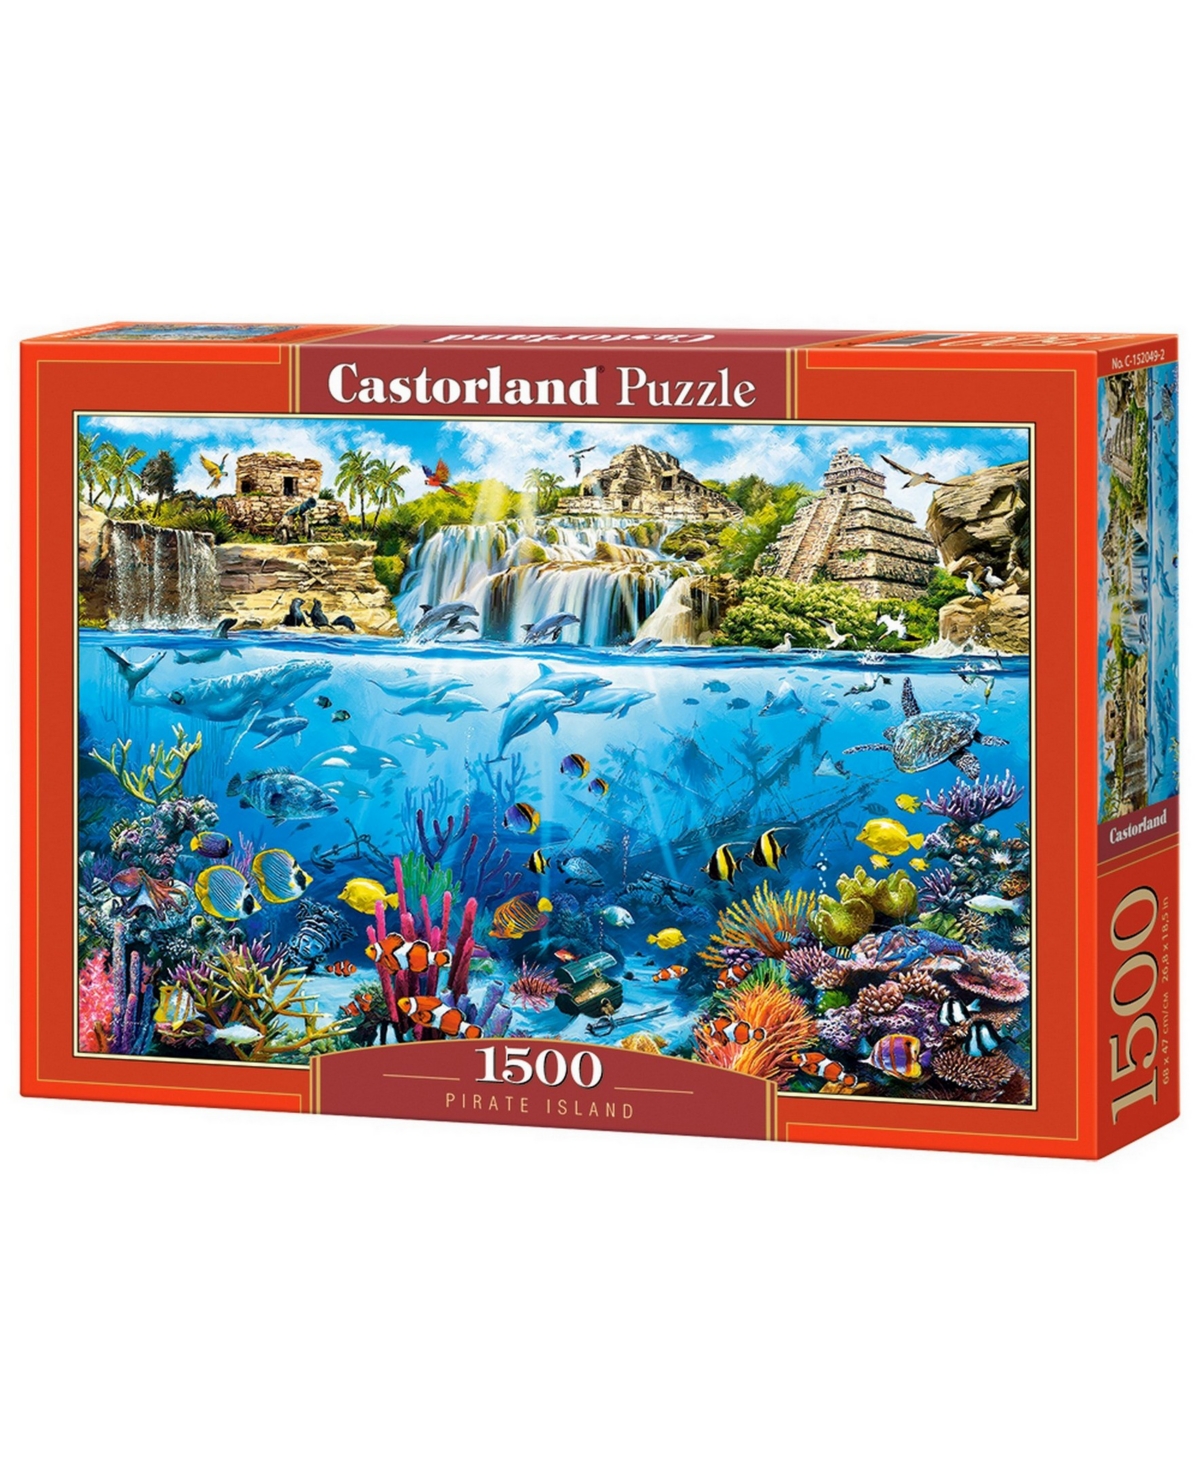 Castorland Kids' Pirate Island Jigsaw Puzzle Set, 1500 Piece In Multicolor